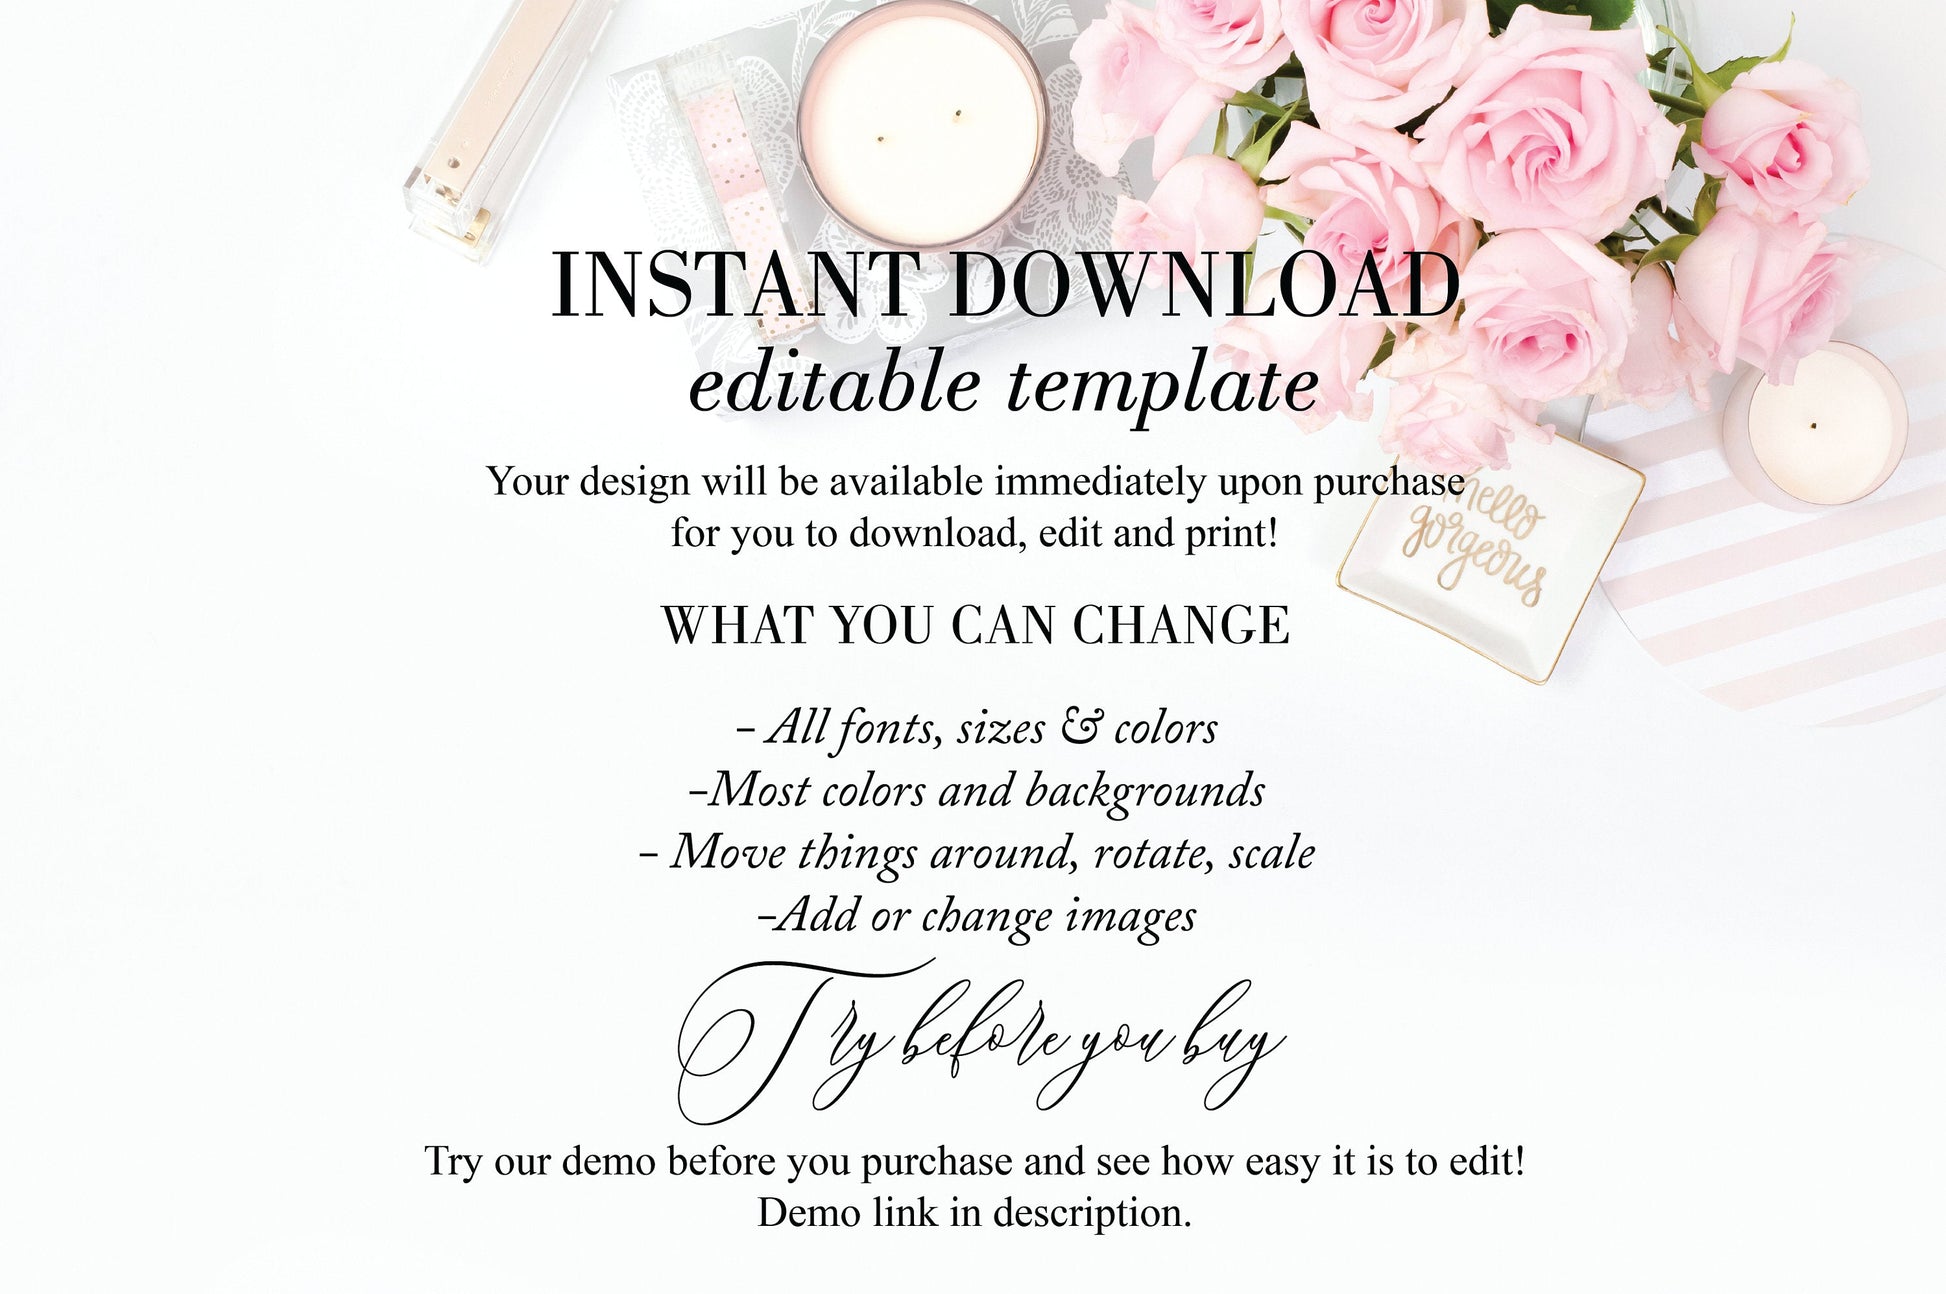 Greenery Floral Wedding Invitation Template Instant Download Templett Printable Wedding Editable - Cora WEDDING INVITATIONS SAVVY PAPER CO